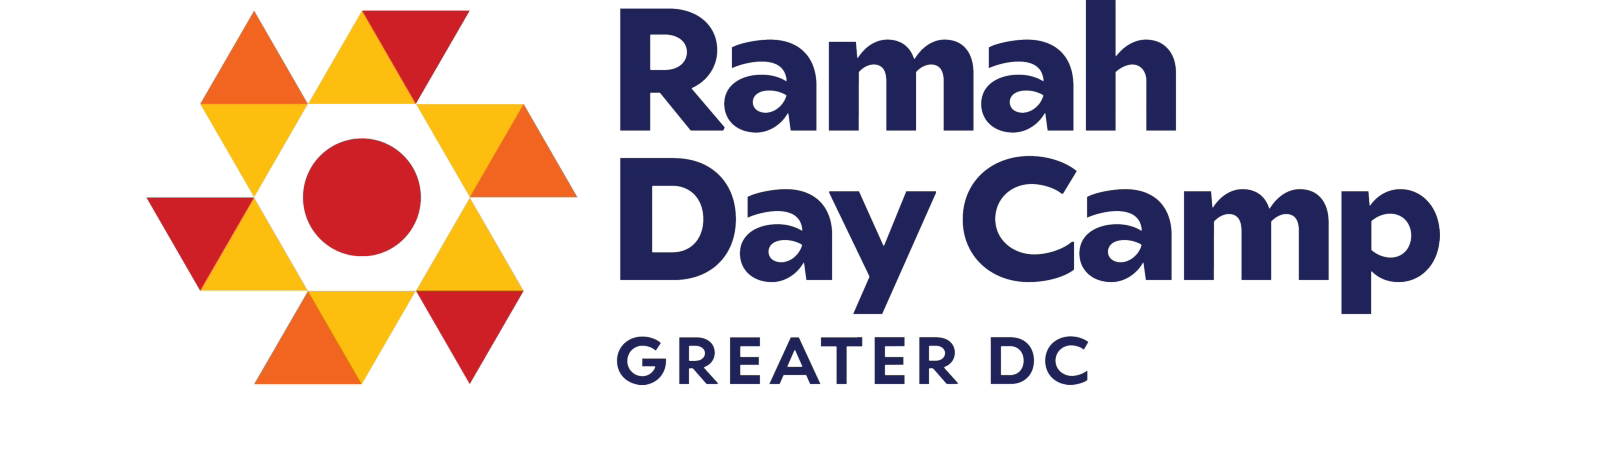 Ramah Day Camp Greater DC